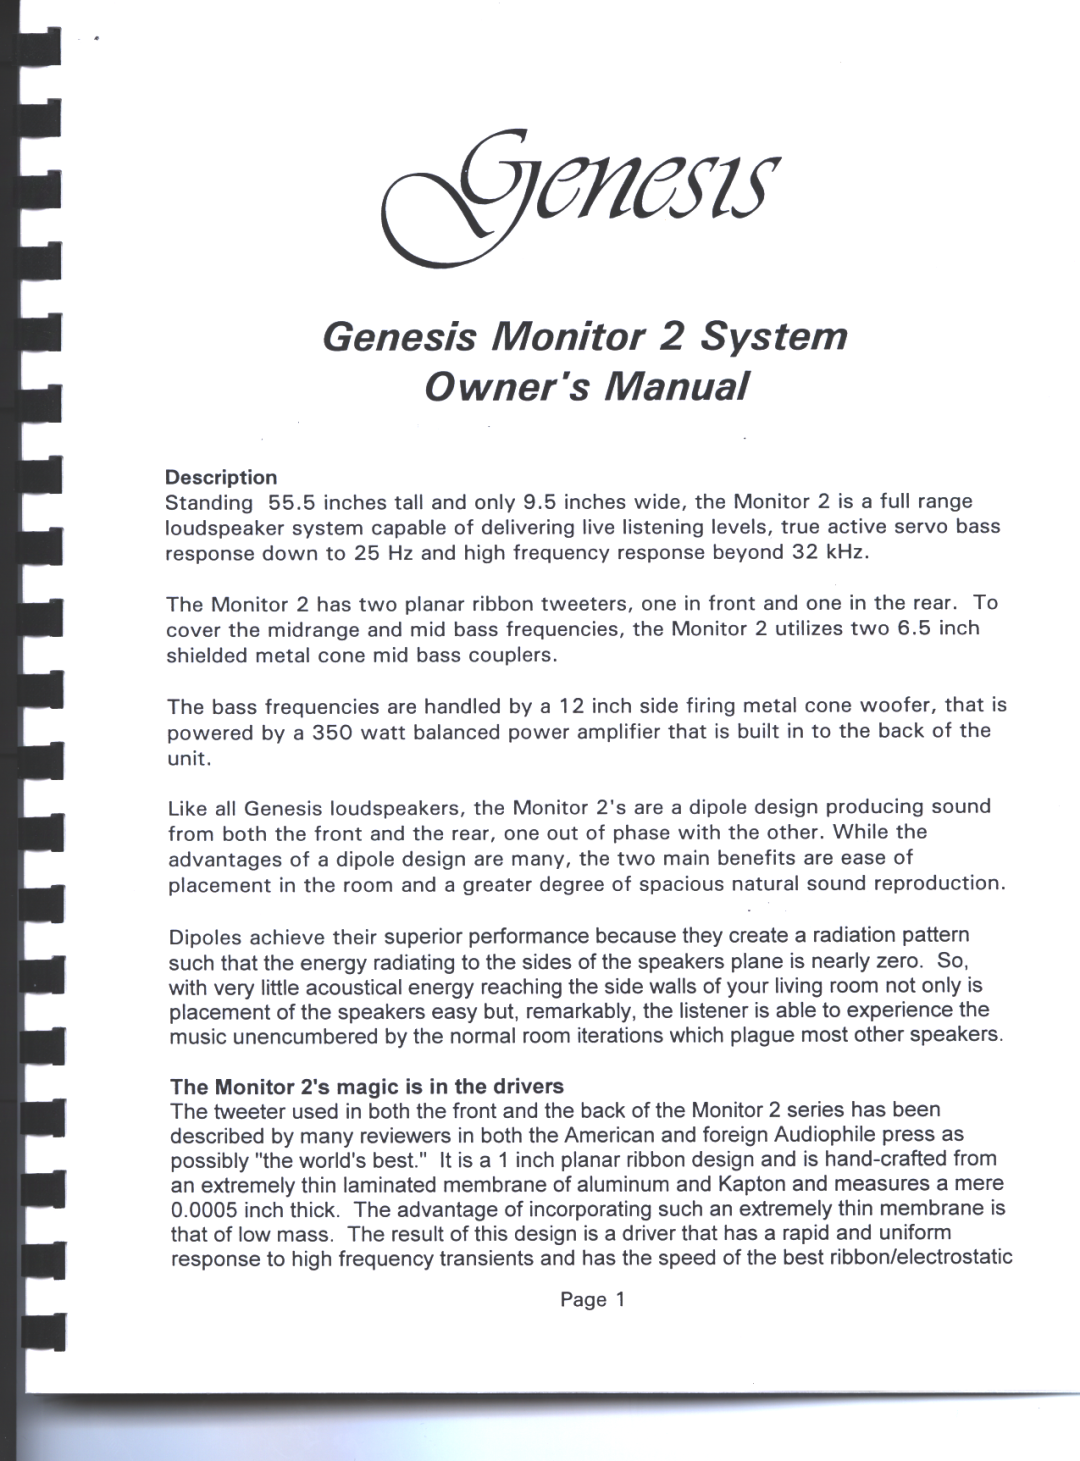 Genesis Advanced Technologies Monitor 2 manual 